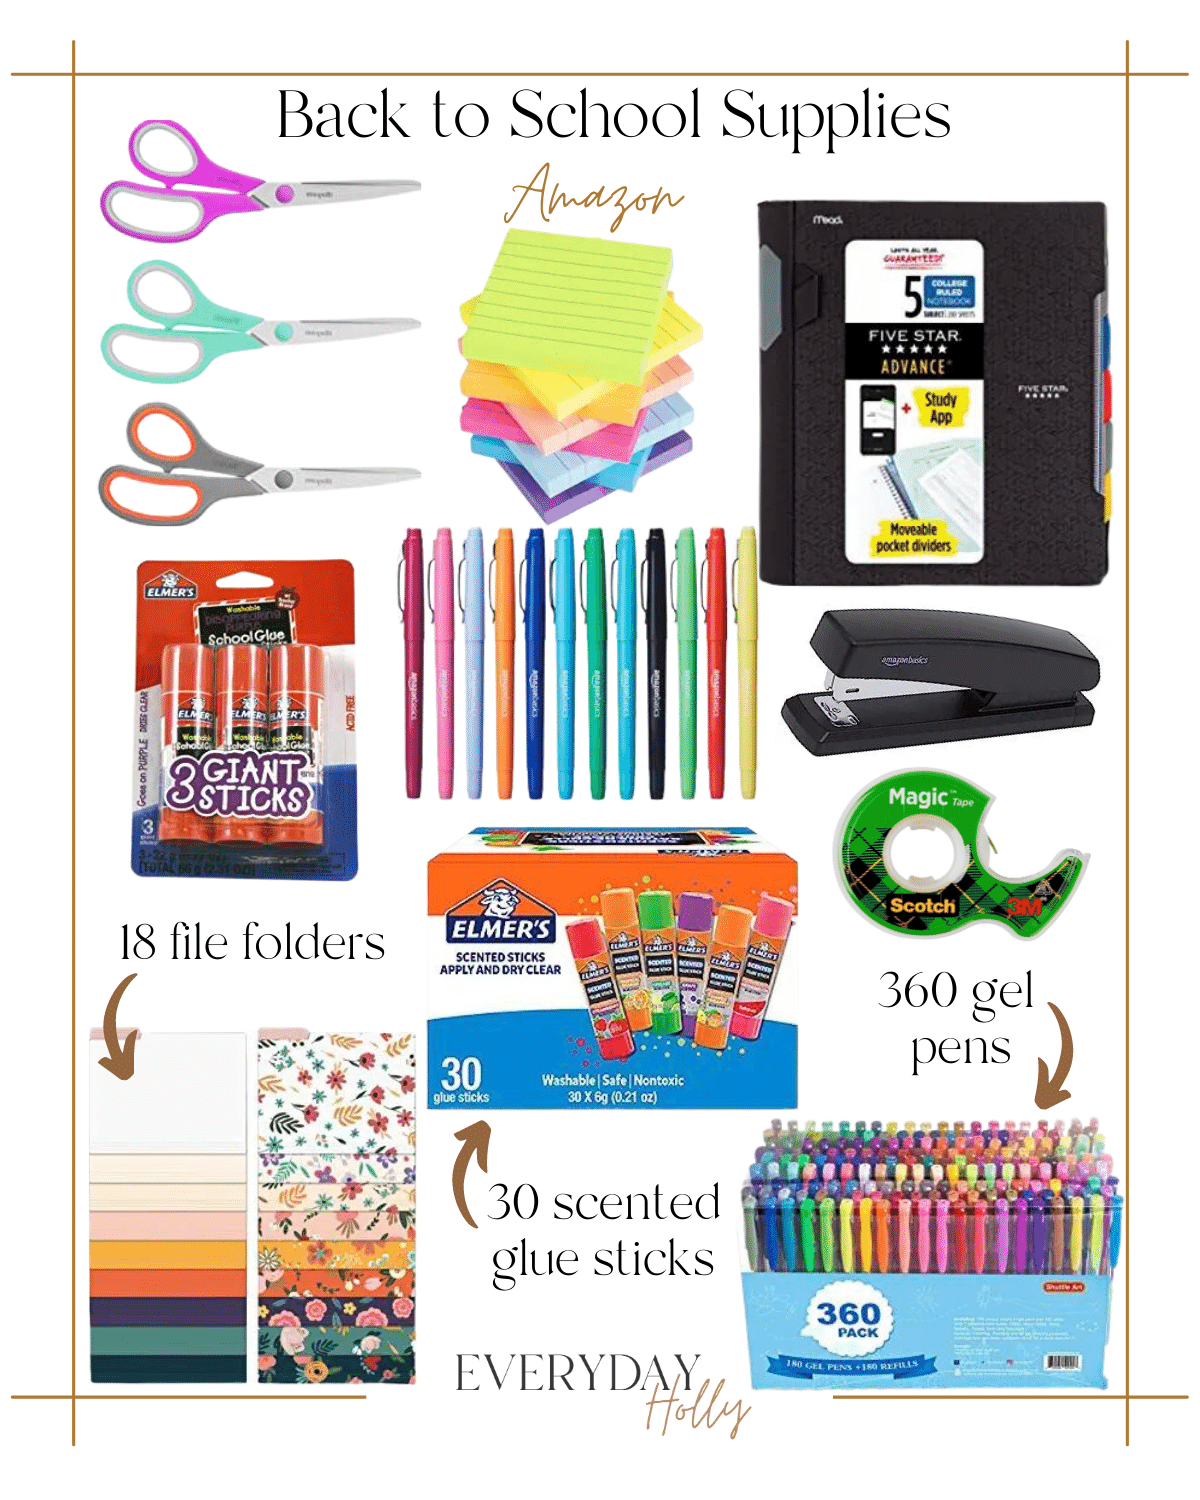 Back to School School Supplies

#backtoschool #schoolsupplies #binder #notebook #calculator #backtoschoolshopping #markers #crayons #pens #mechanicalpencils